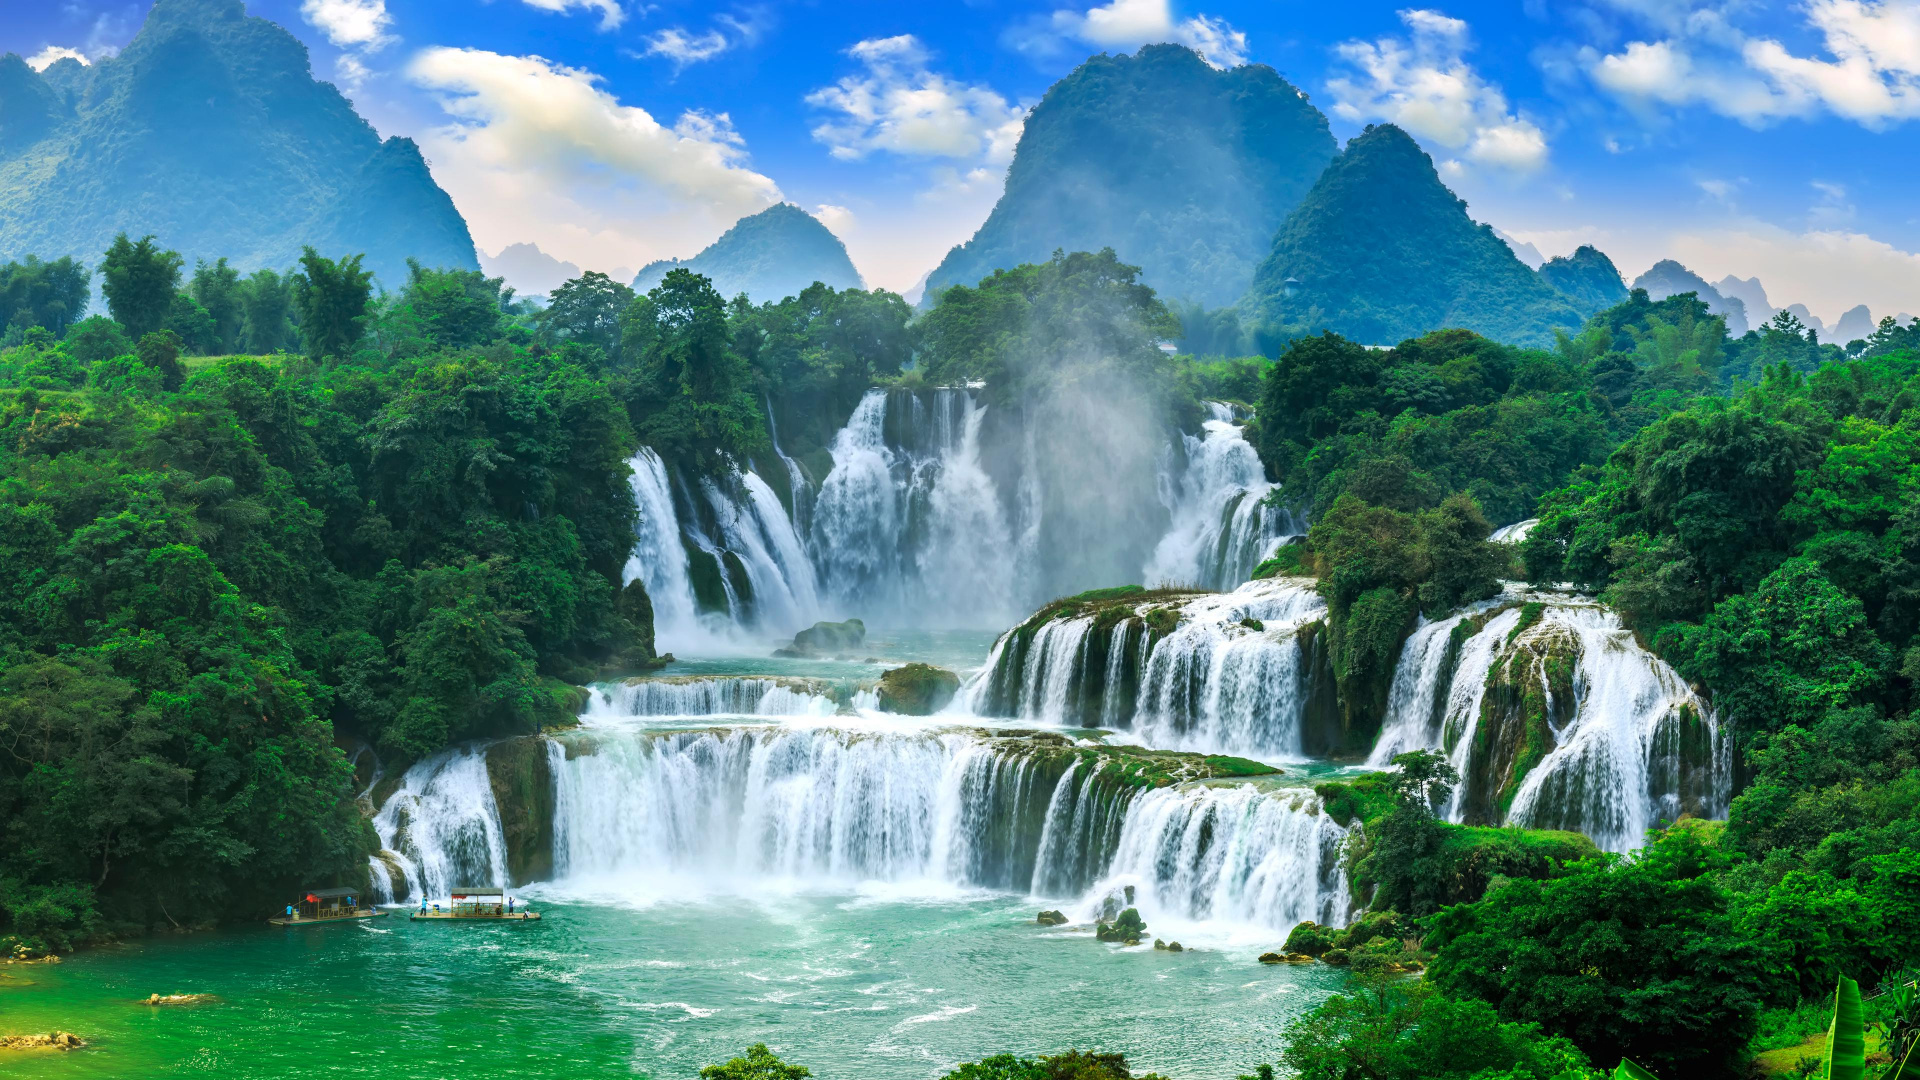 安赫尔瀑布, 菩提瀑布Latehar, Kuang si Waterfall, Chongzuo, 旅行 壁纸 1920x1080 允许